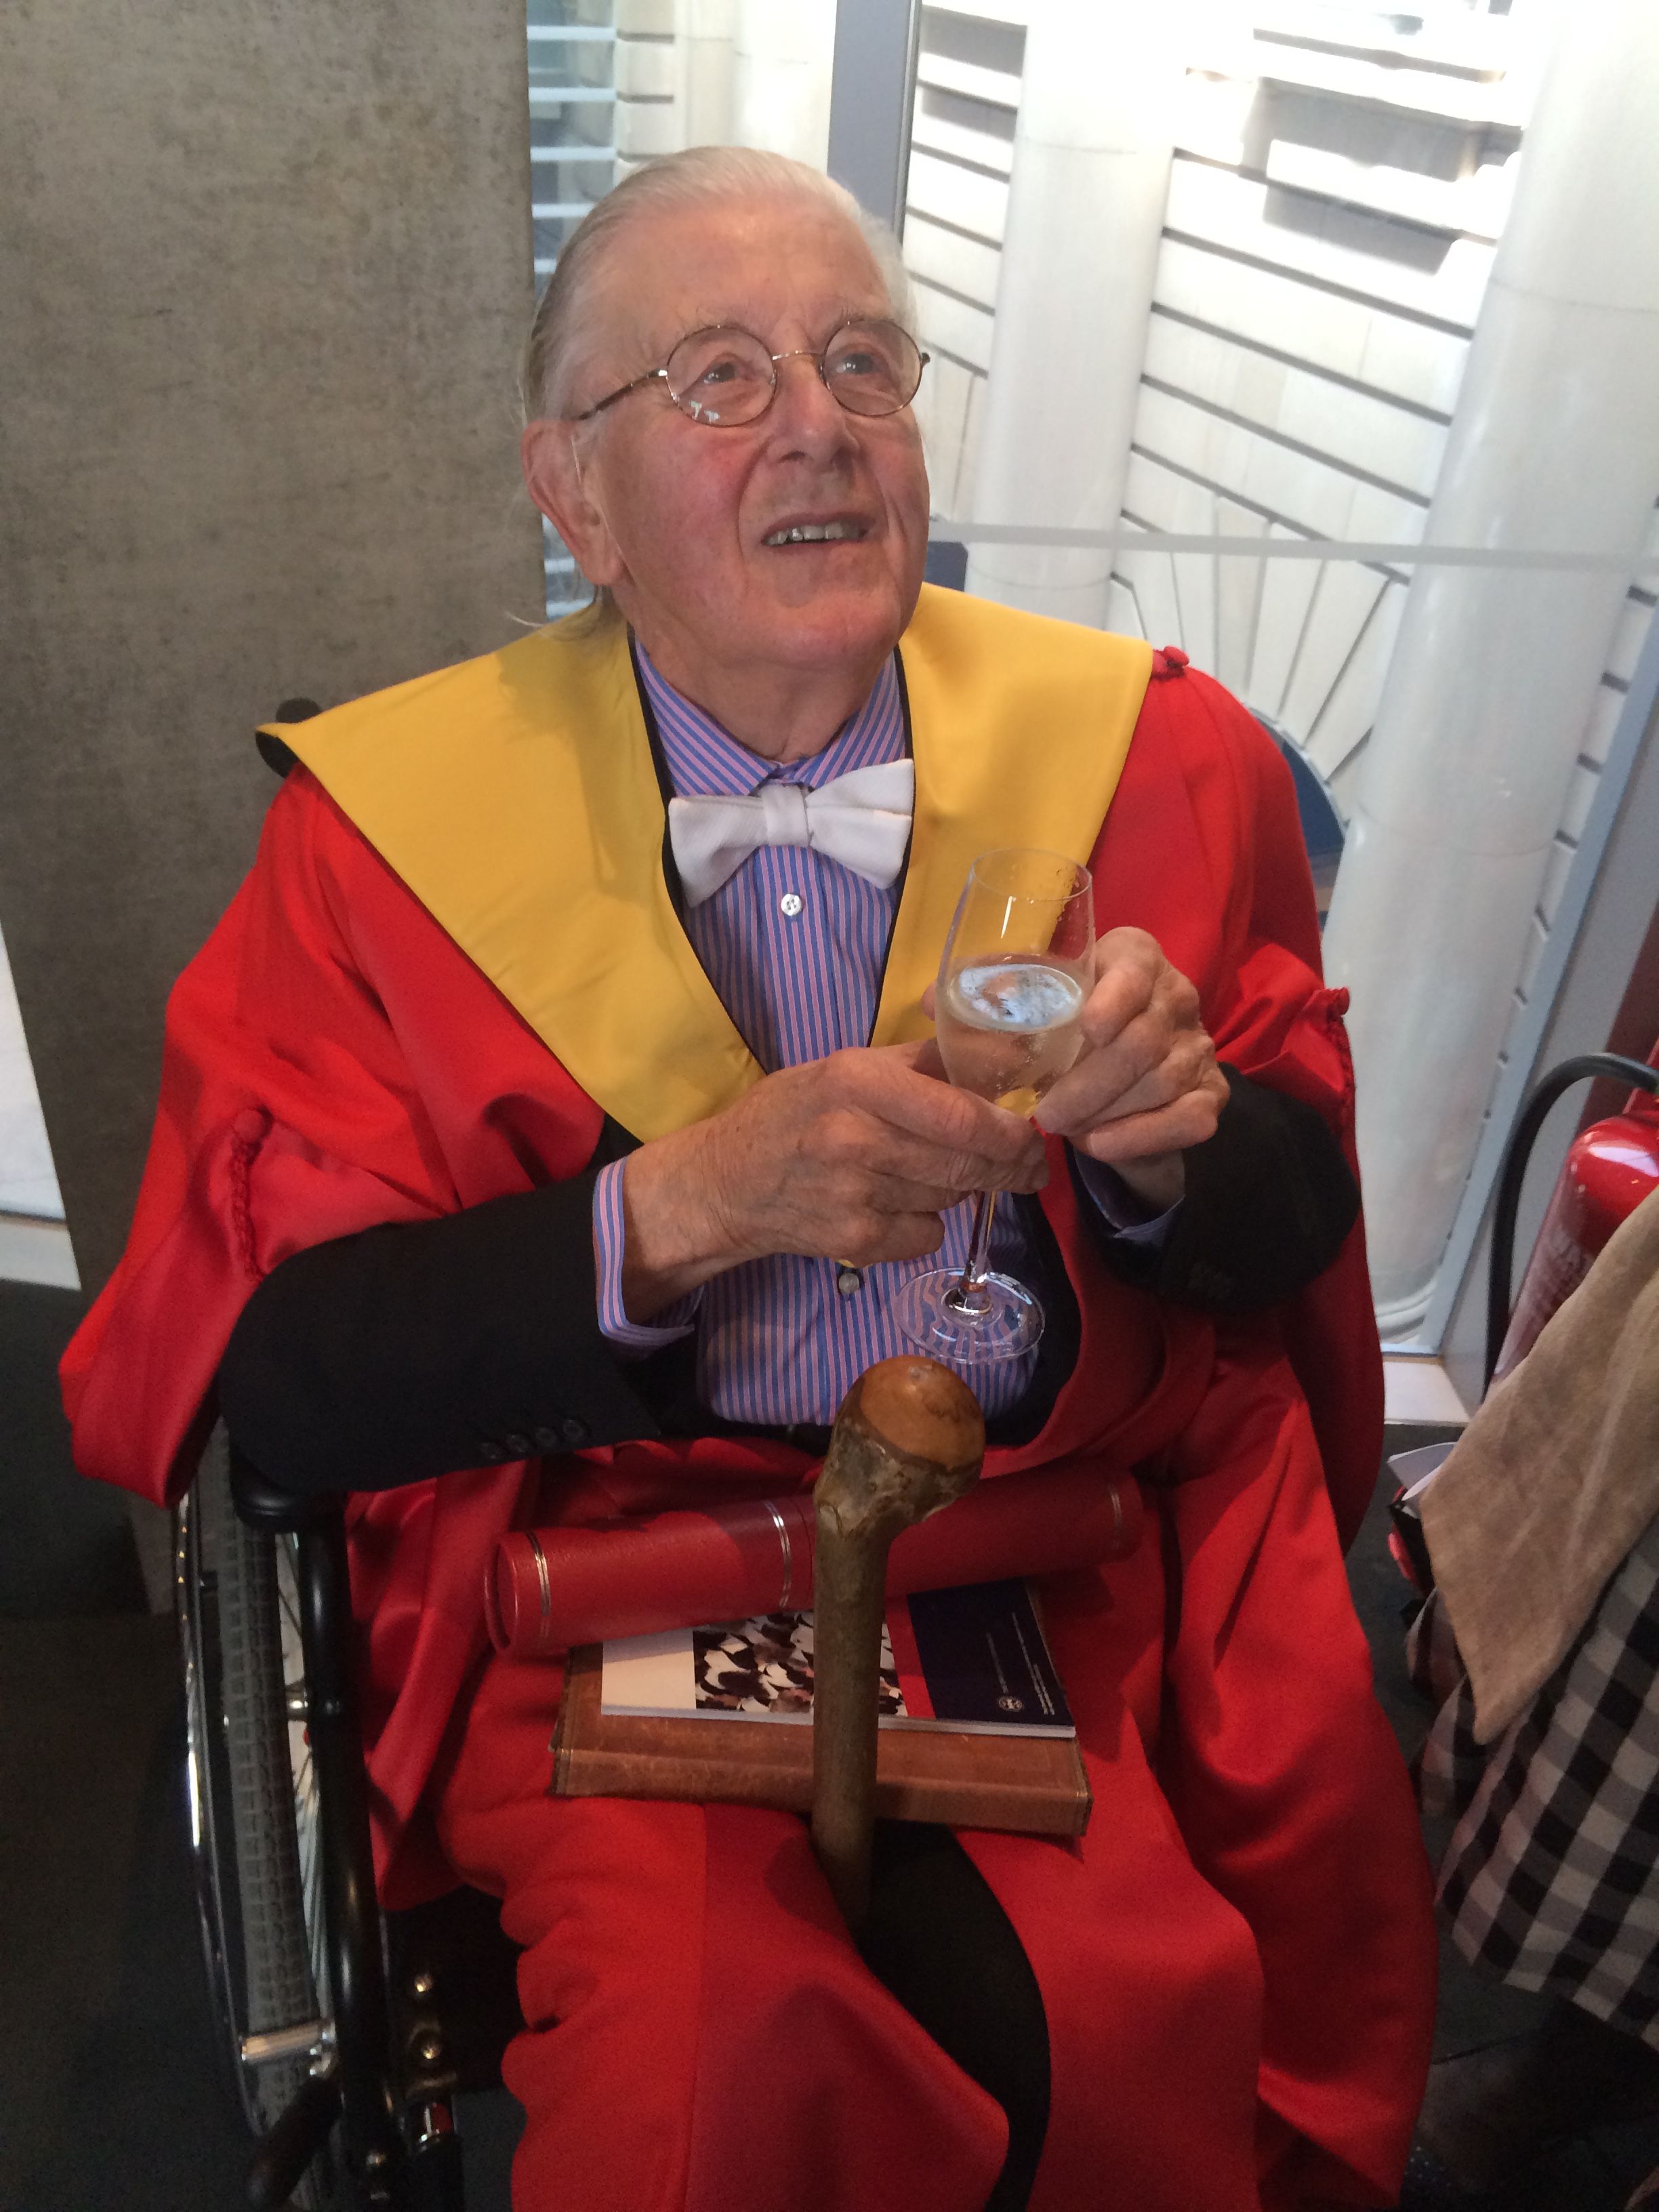 Patrick Reyntiens celebrating his doctorate from Edinburgh University on June 27th 2015